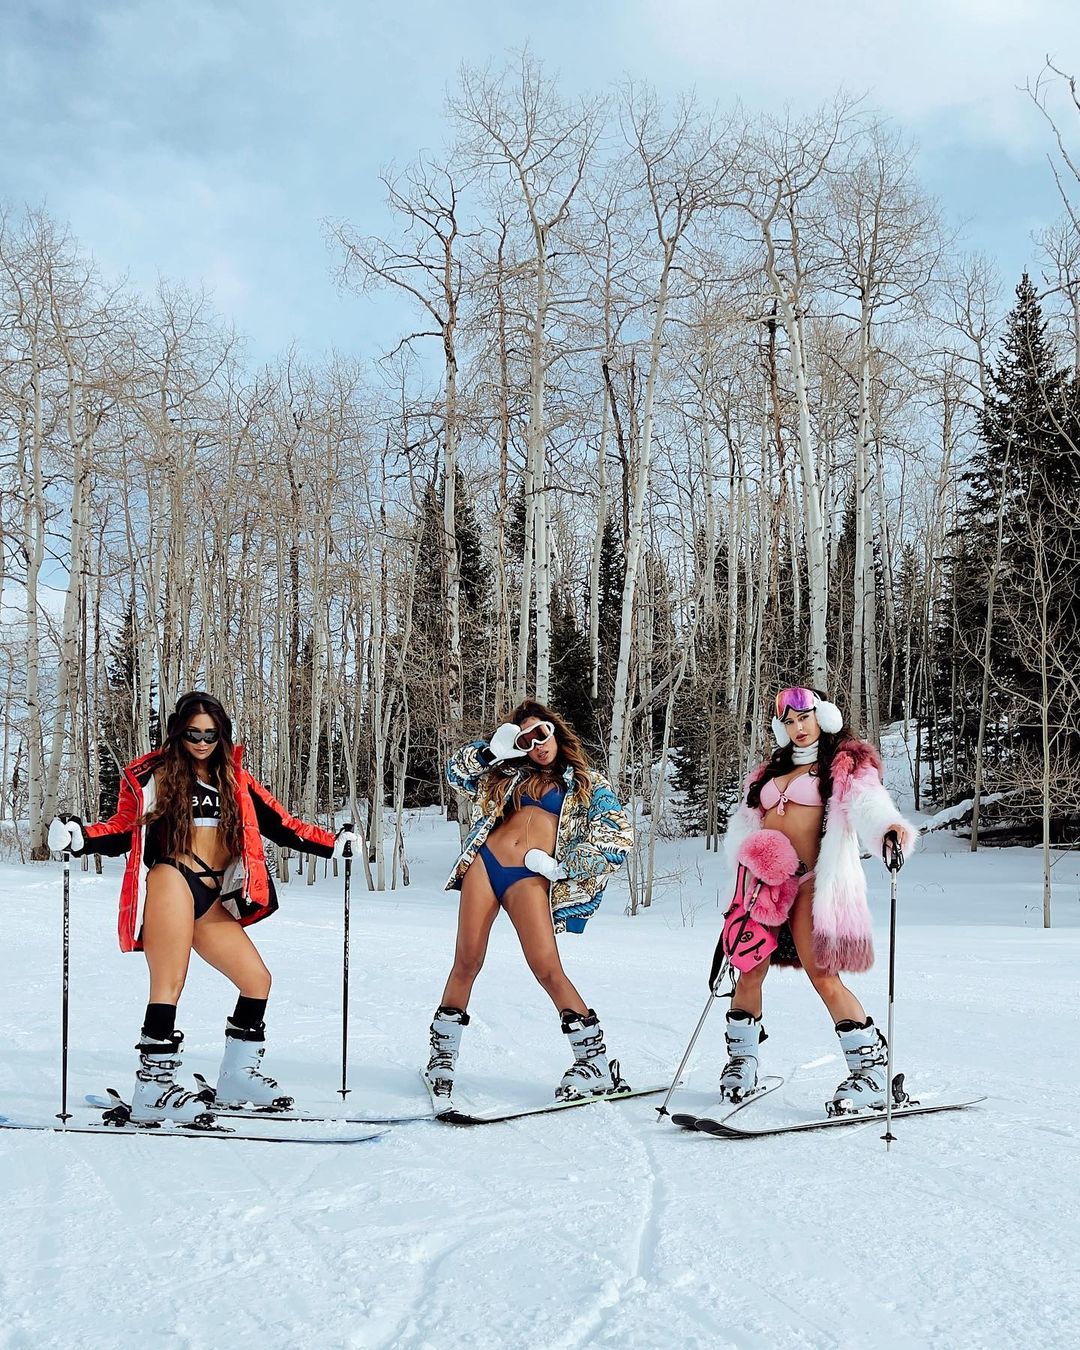 Photos n°13 : Babes in Bikinis Braving the Snow!